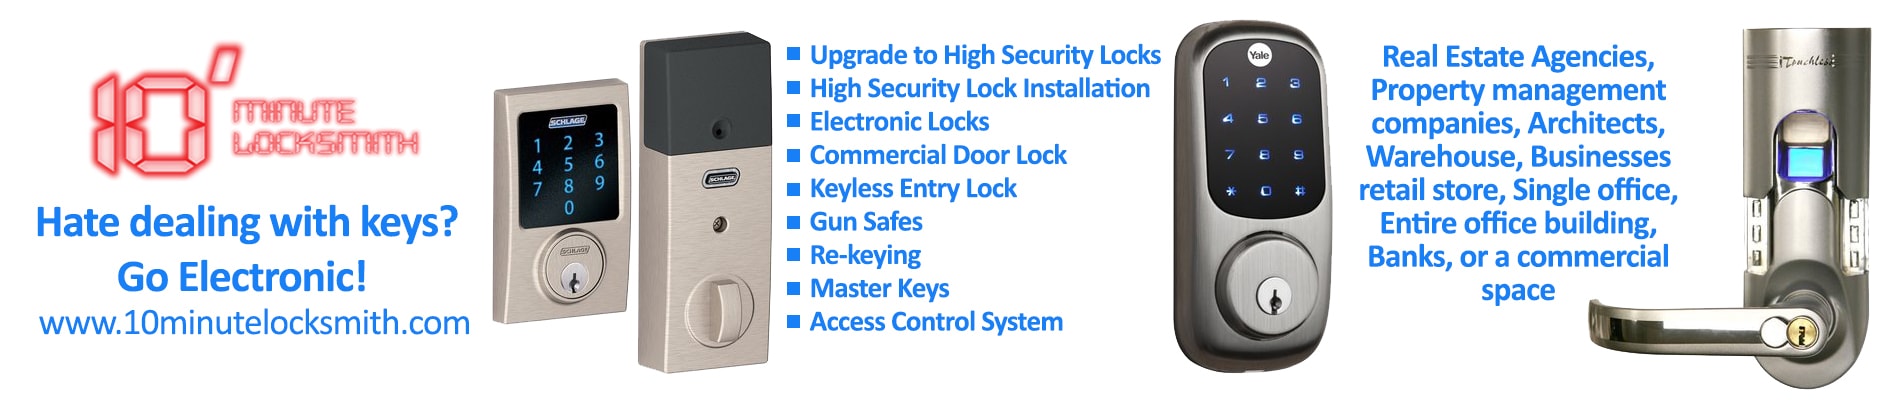 Replacing Electronic Locks Service